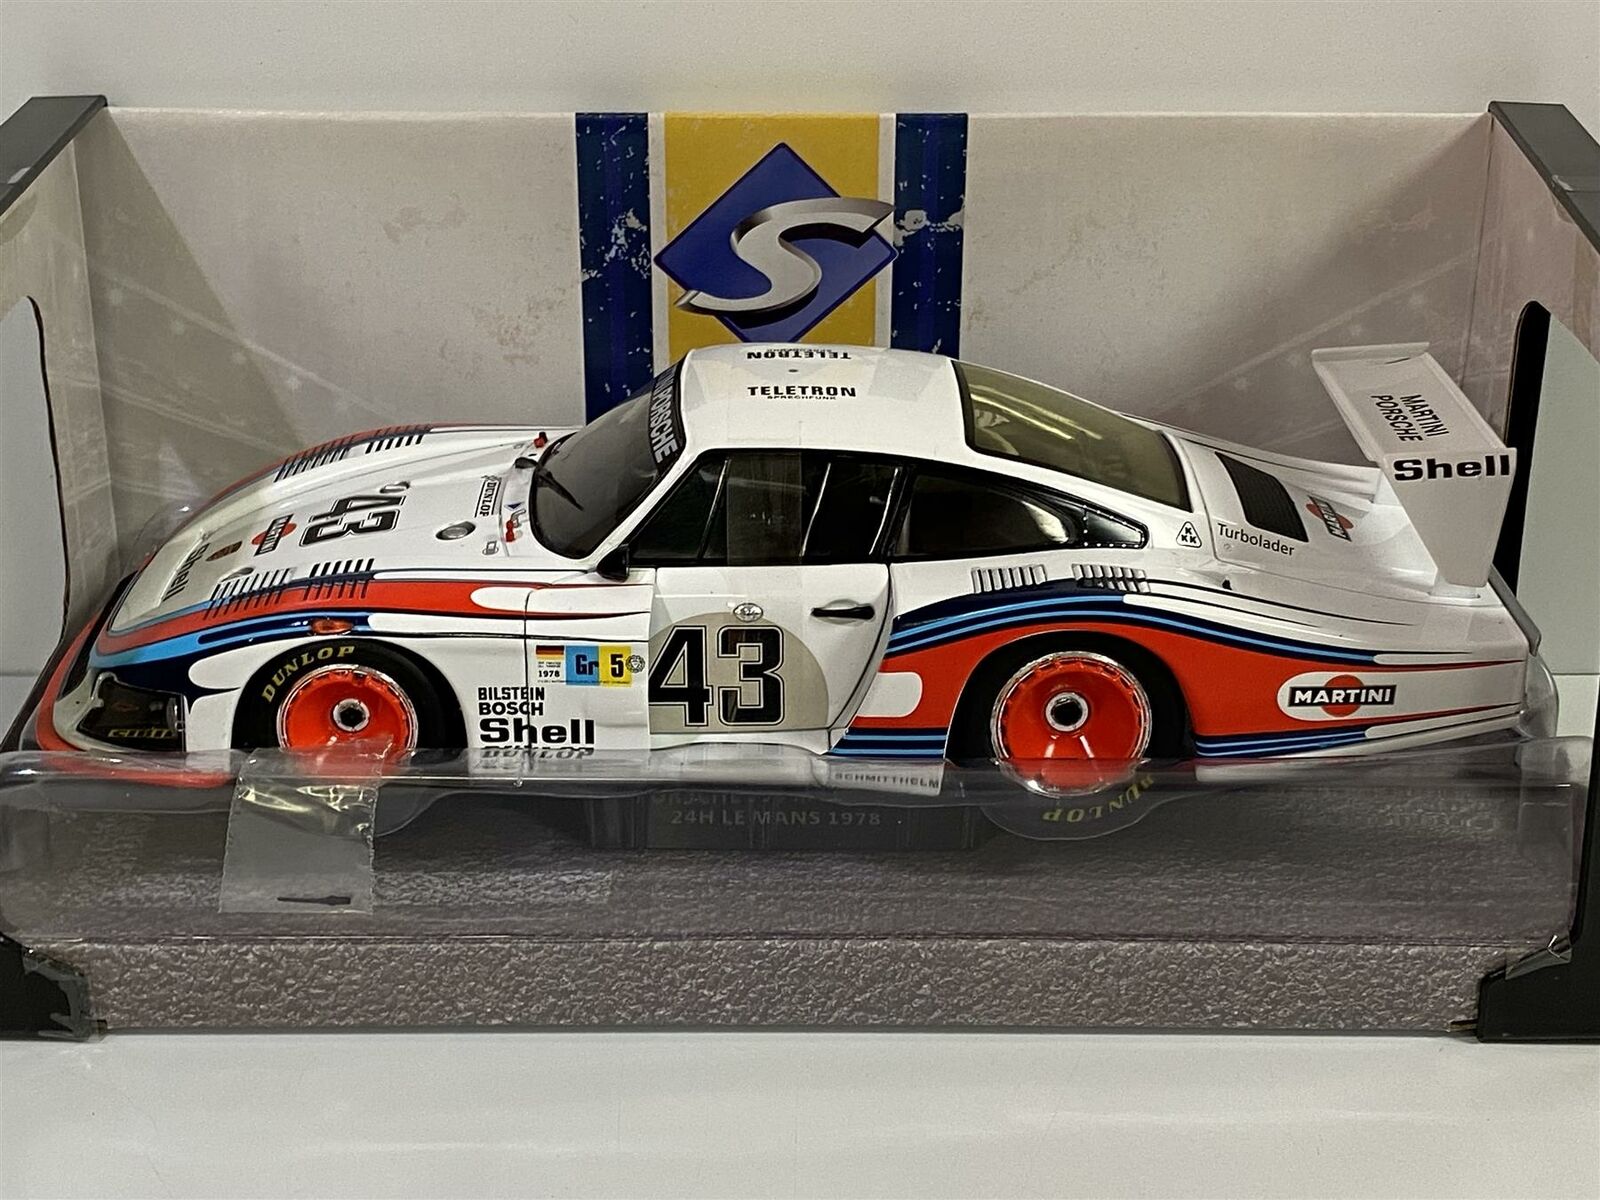 1/18 Scale Solido Porsche 935/78 Moby Dick Martini Racing No.43 Le Mans